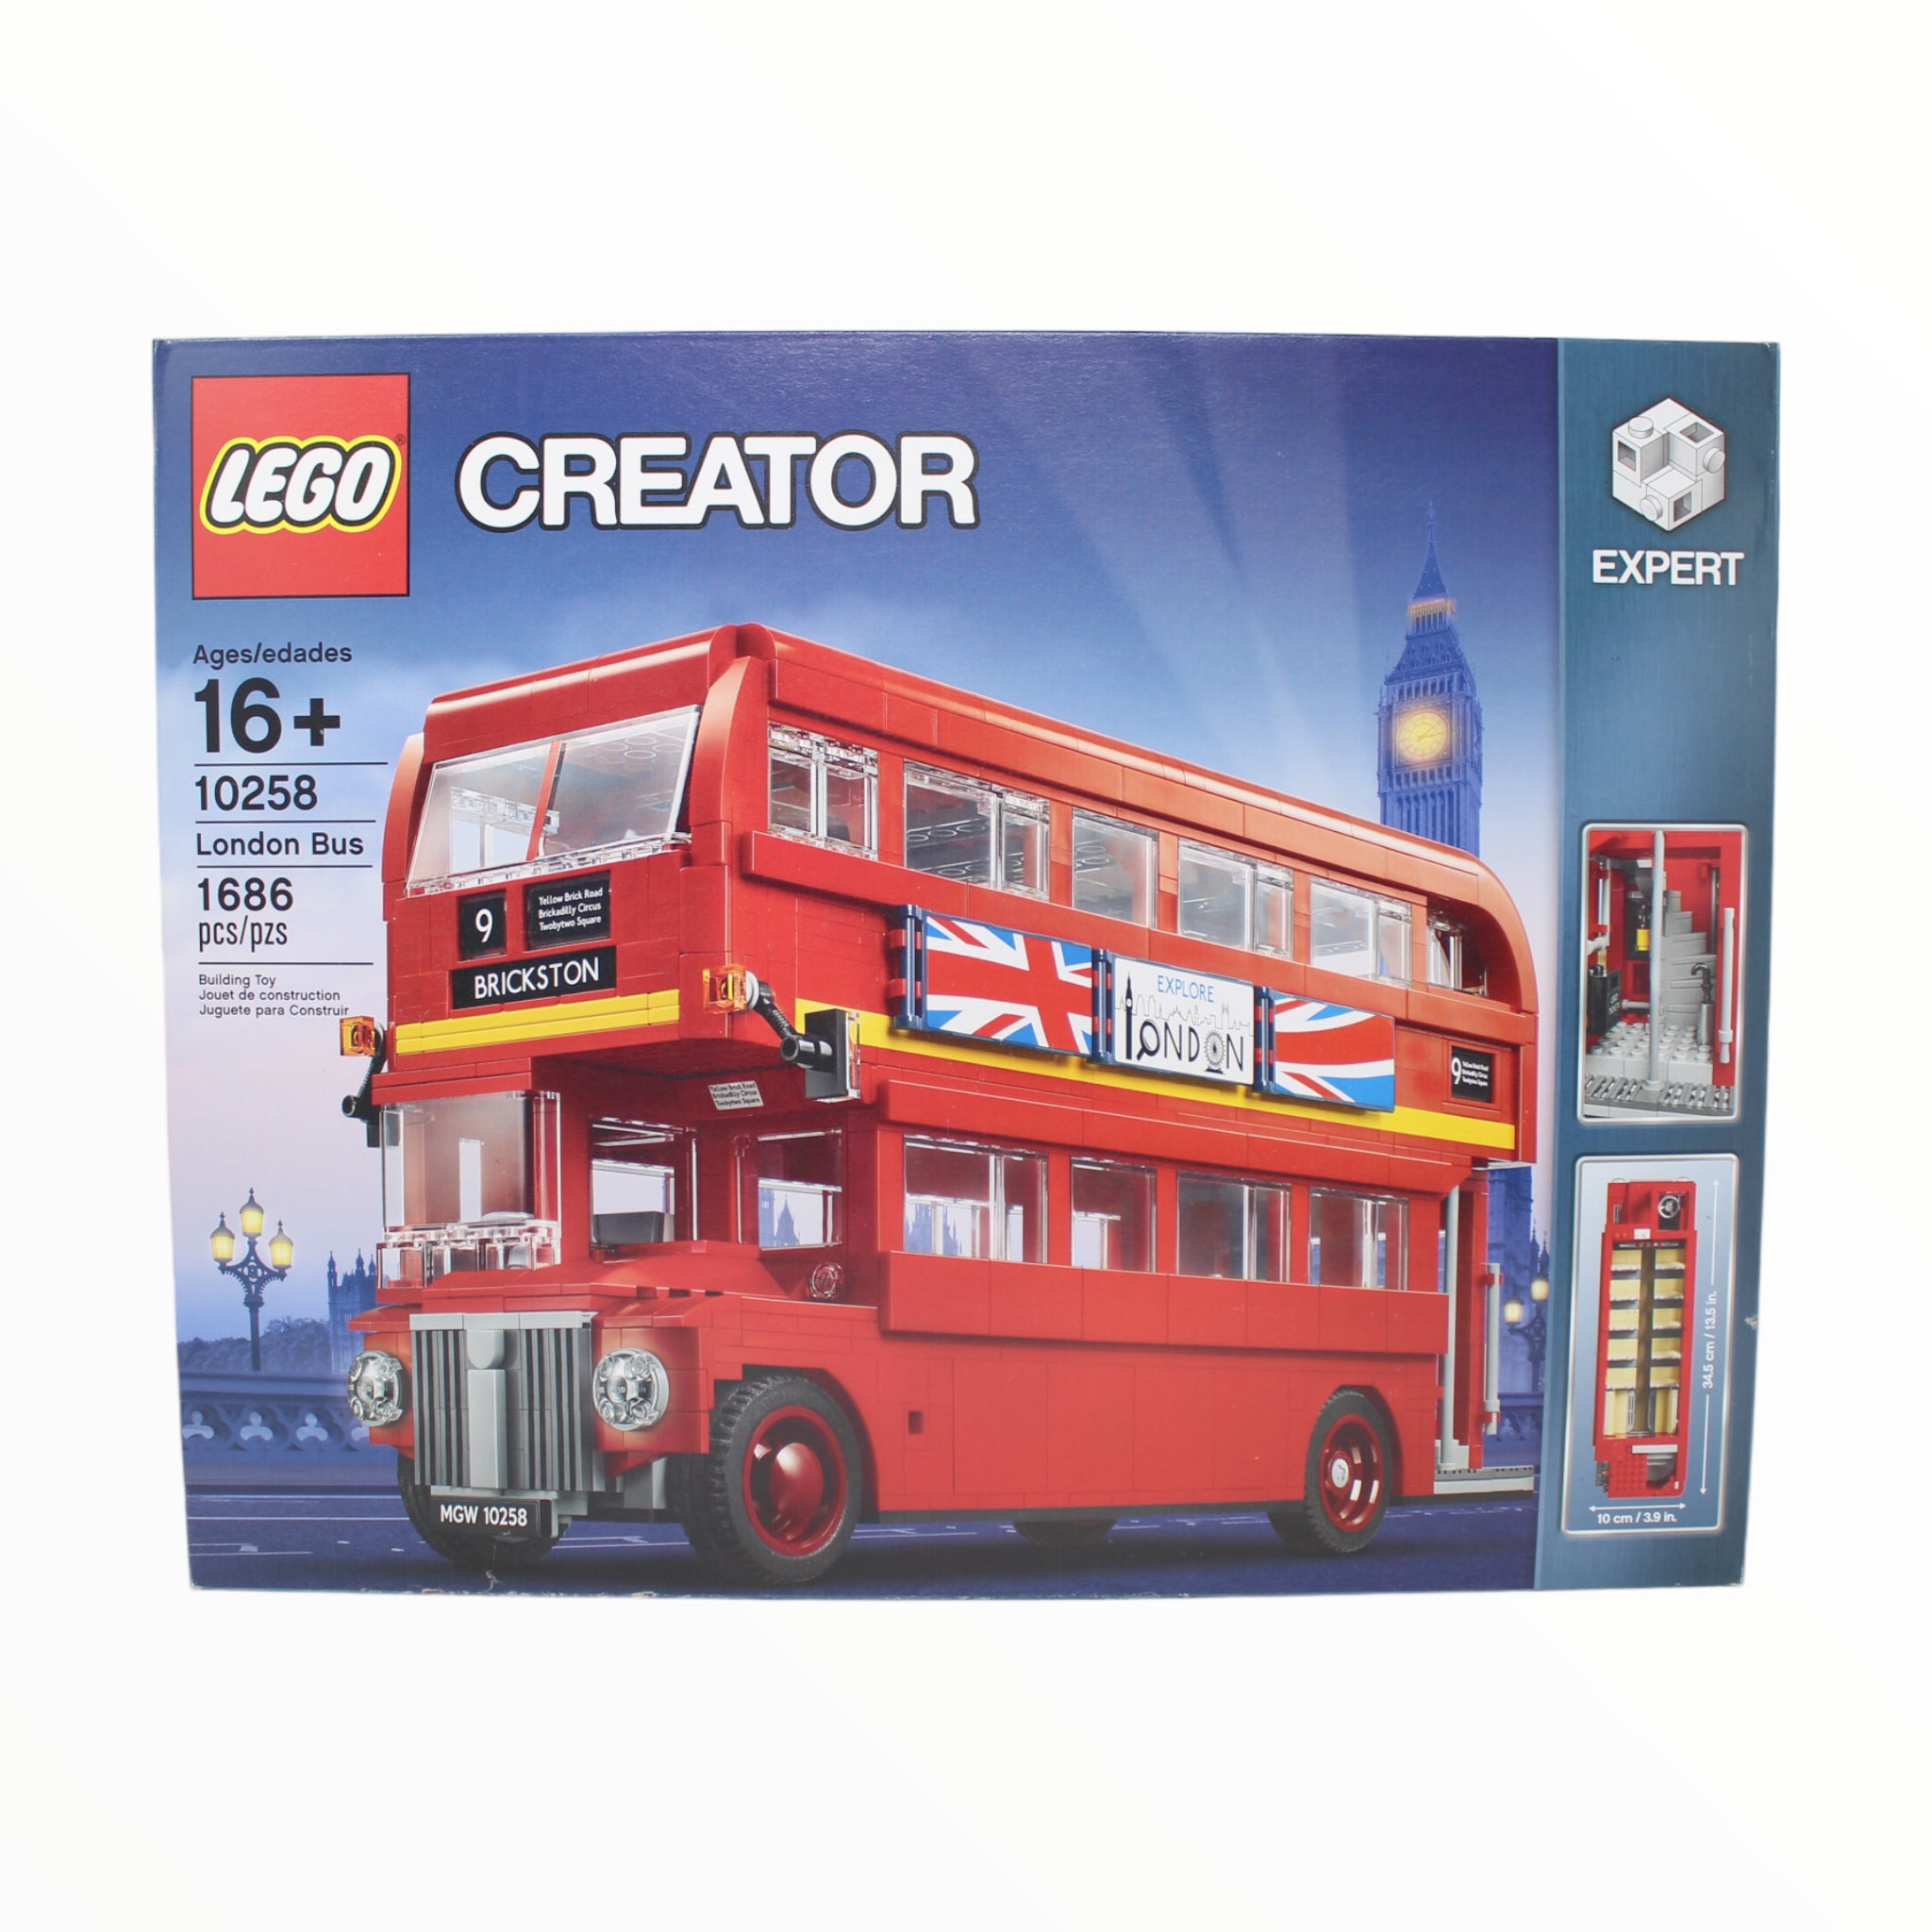 Retired Set 10258 Creator London Bus